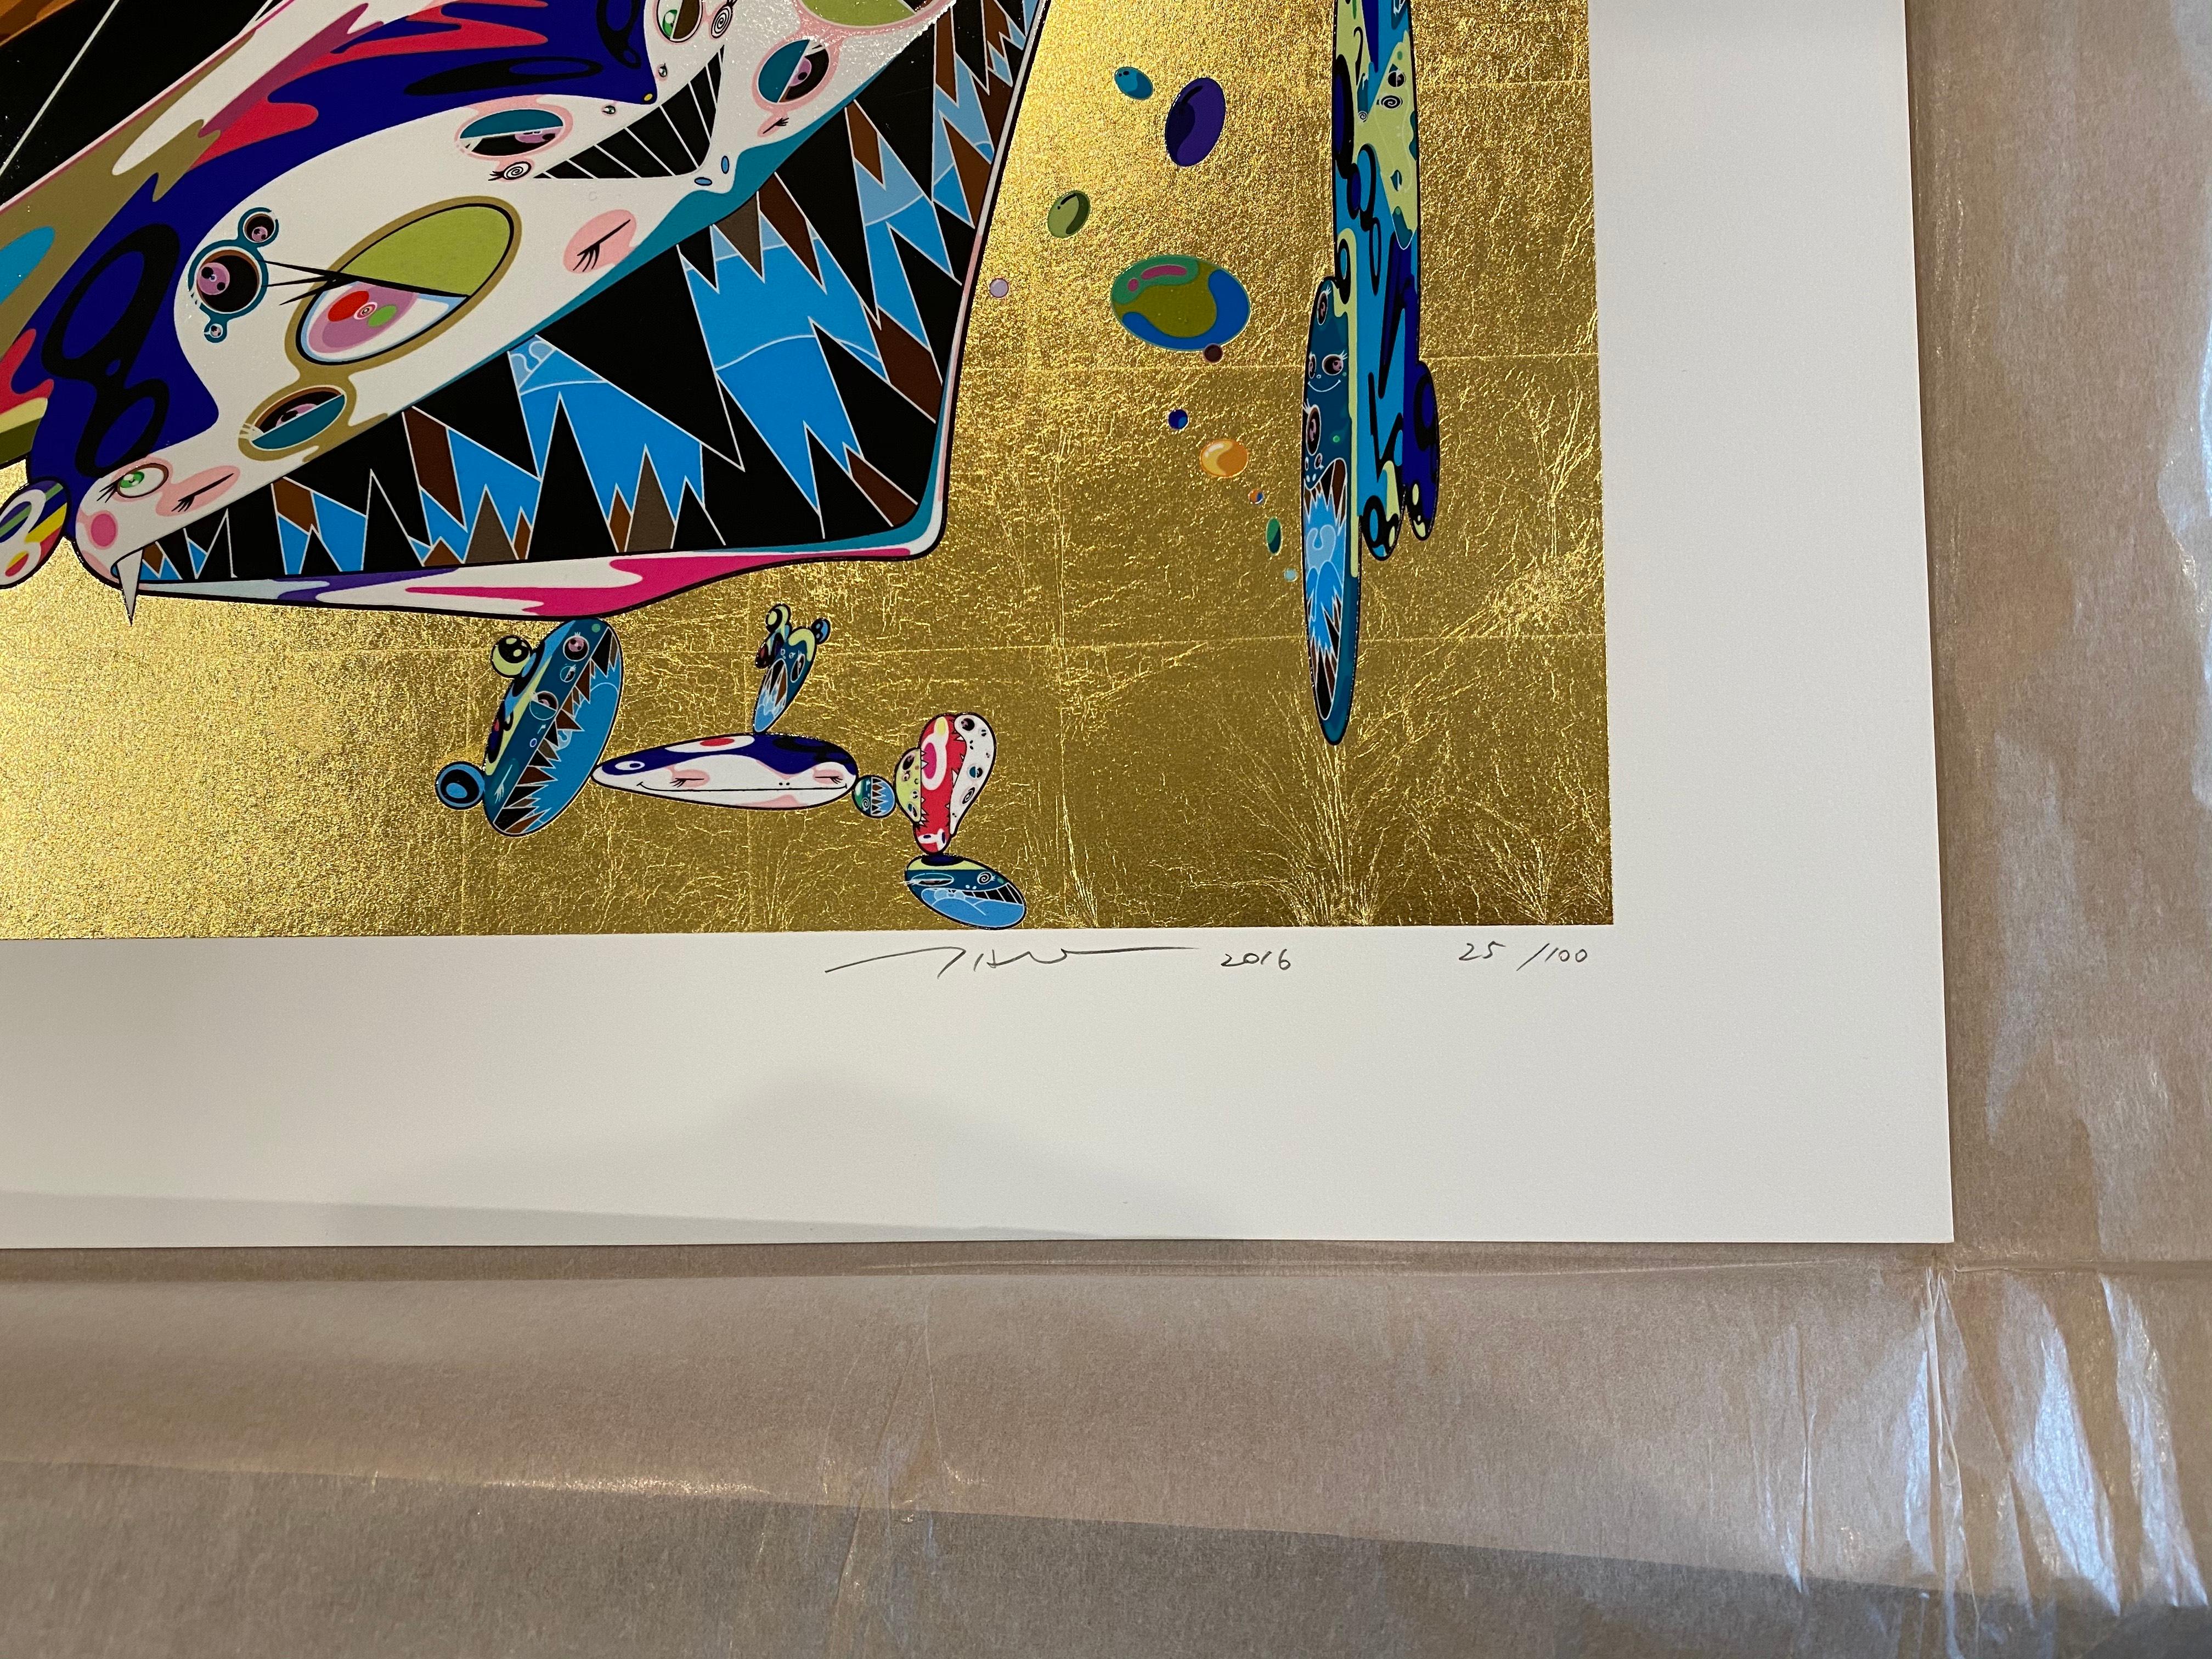 Artist: Takashi Murakami
Medium: Screenprint with gold leaf
Title: Tan Tan Bo
Year: 2016
Edition: 25/100
Sheet Size: 31 1/4 x 44 1/4 inches
Signed: Signed, numbered, and dated
Publisher: Kaikai Kiki Co., Ltd., Tokyo